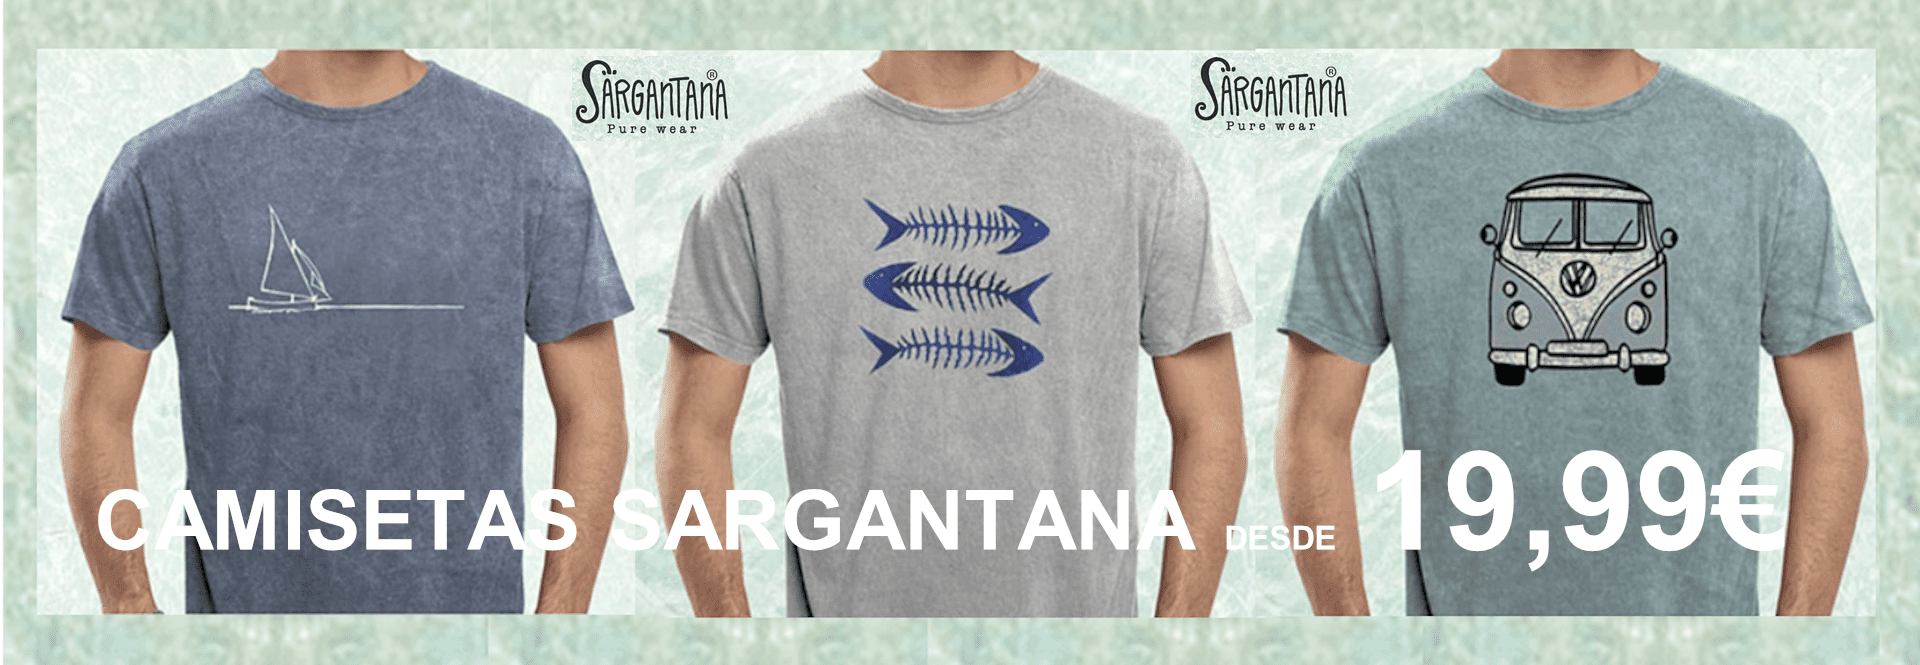 samarretes home marca sargantana